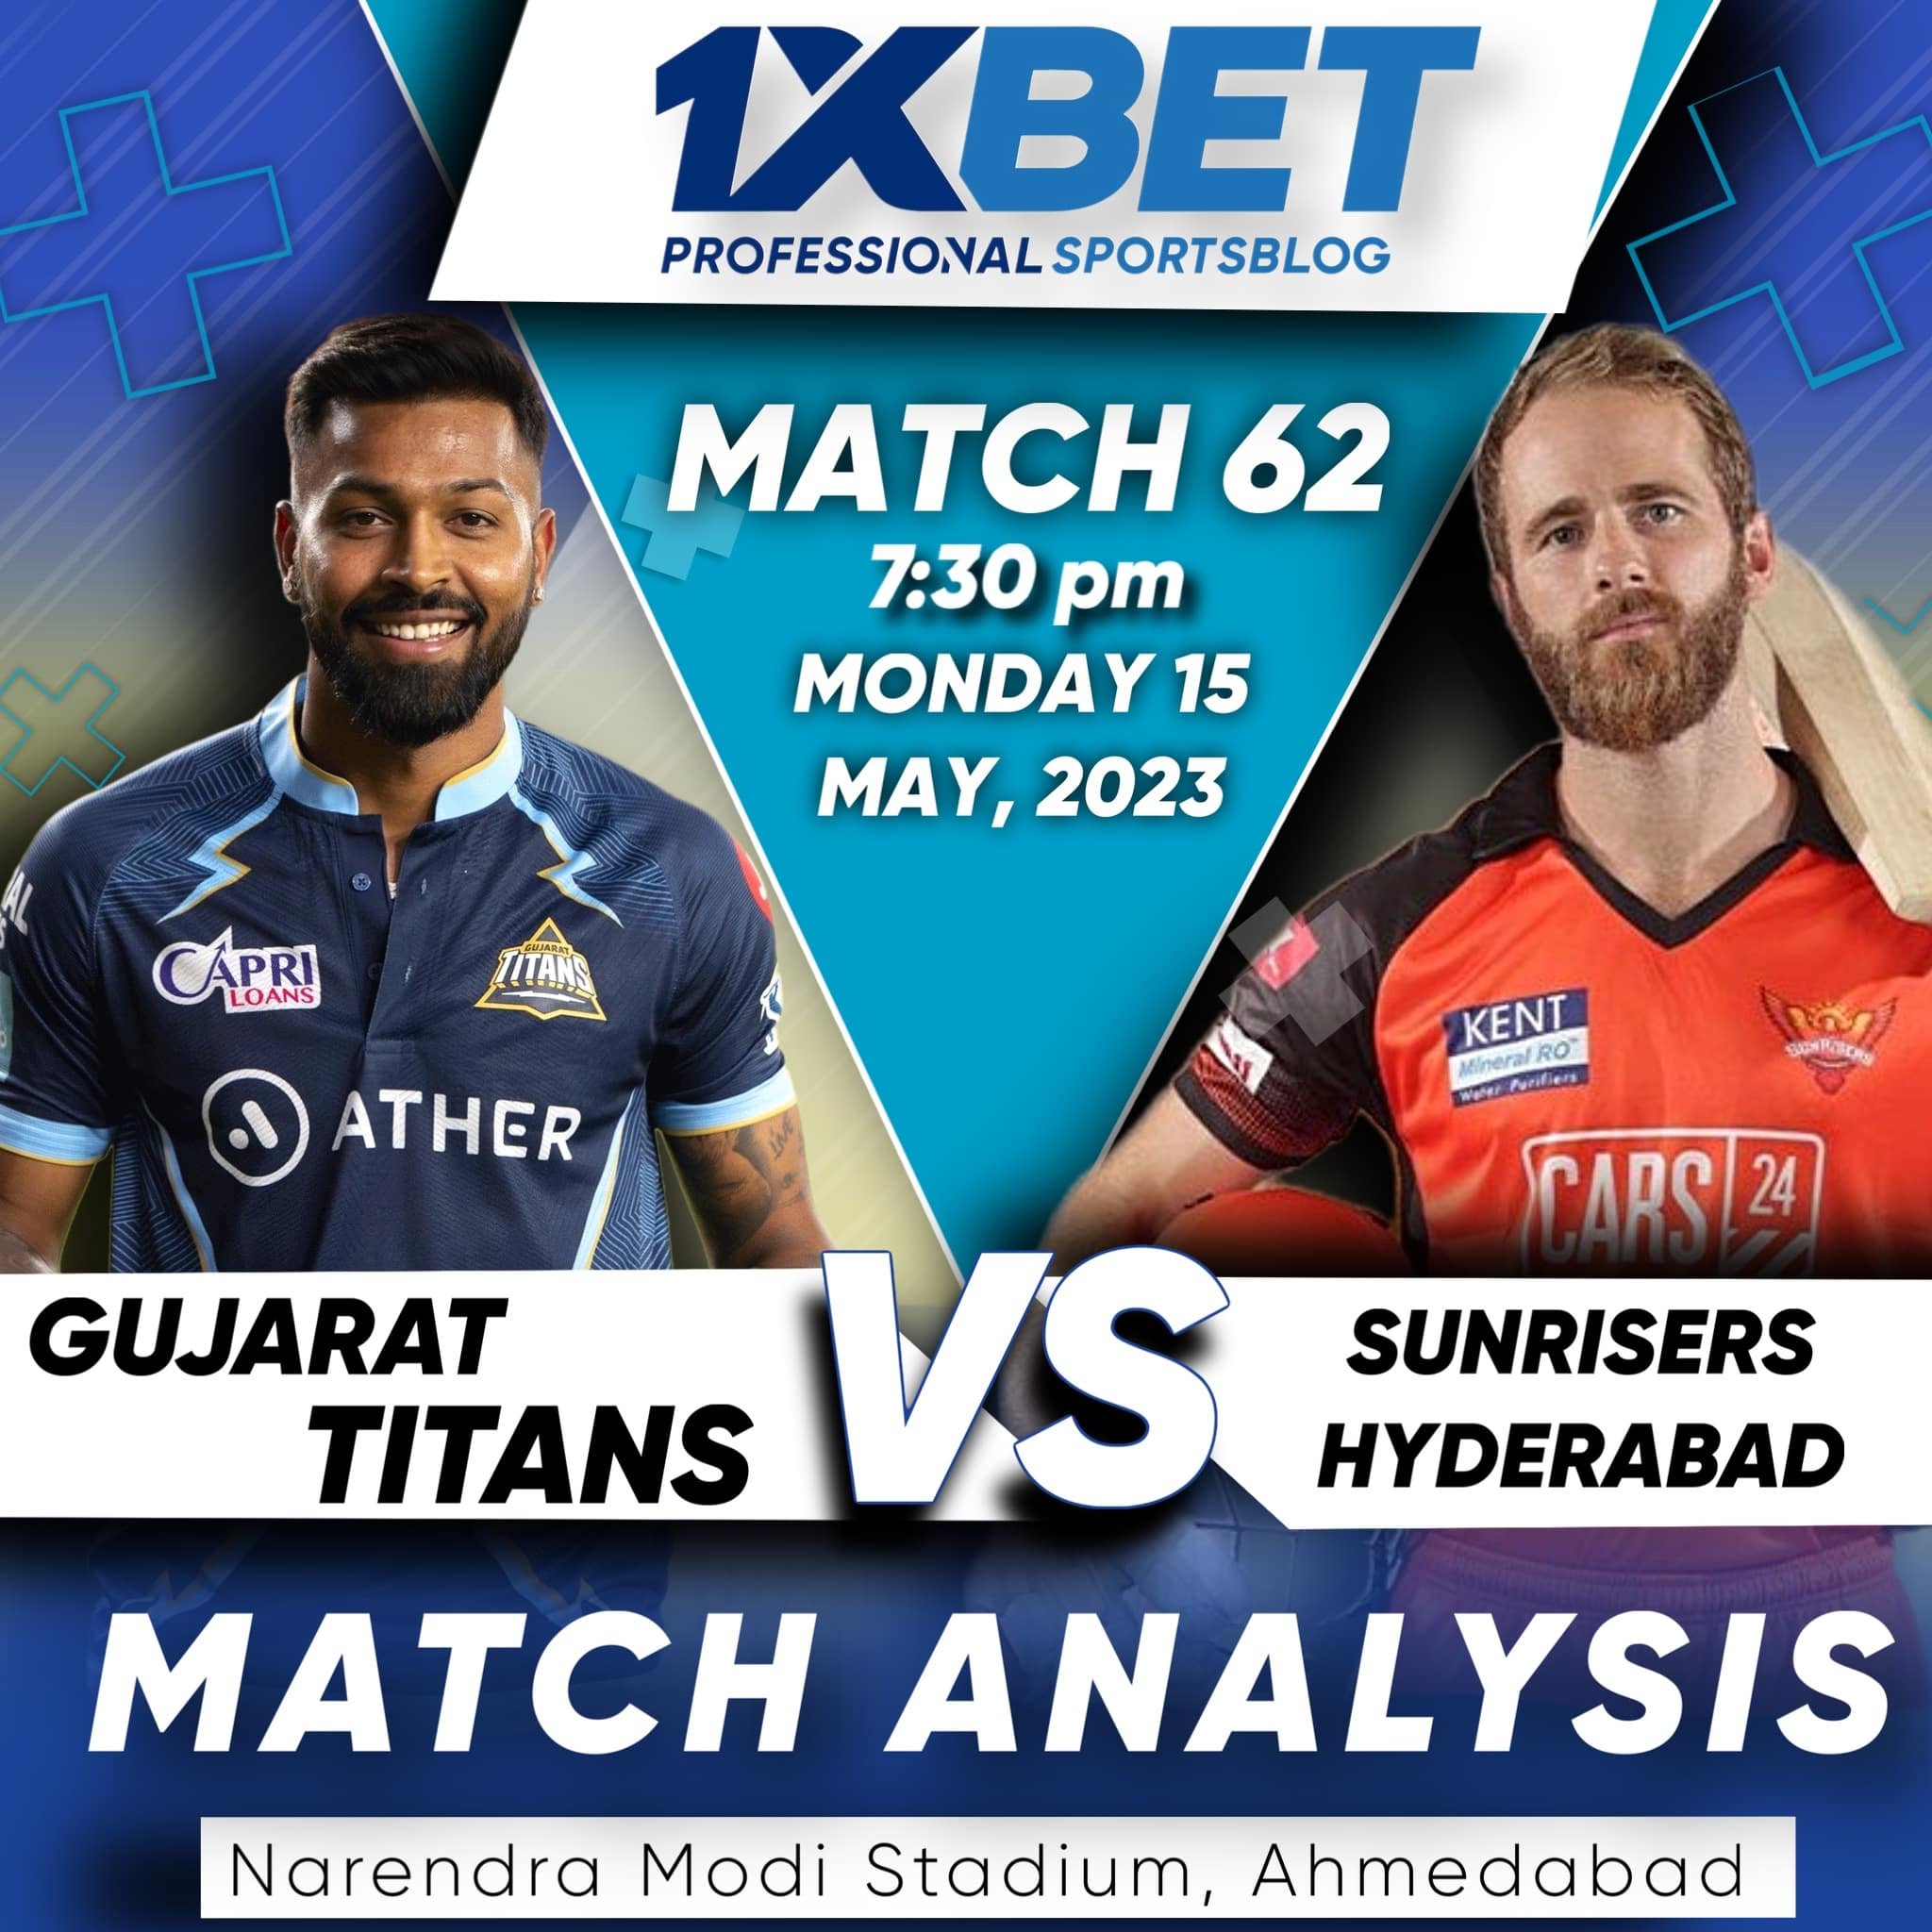 Gujarat Titans vs Sunrisers Hyderabad 2023, 62nd Match Analysis